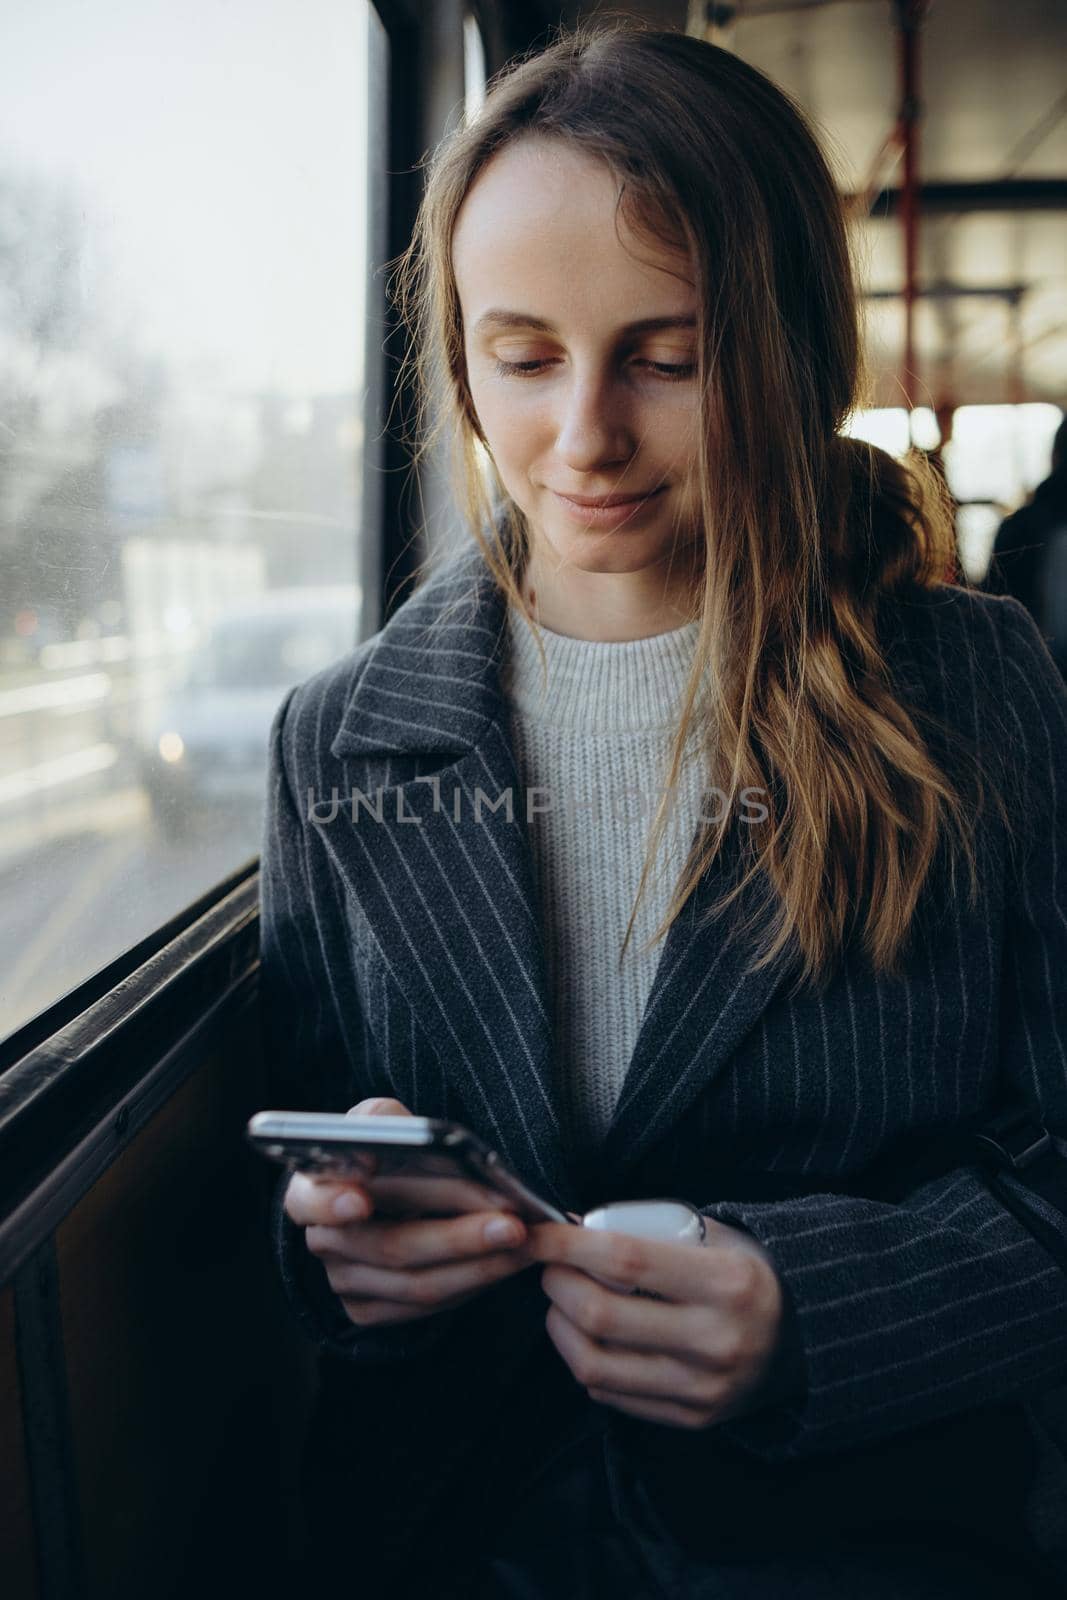 Young woman sadly looking out bus window, wear earphones by Symonenko